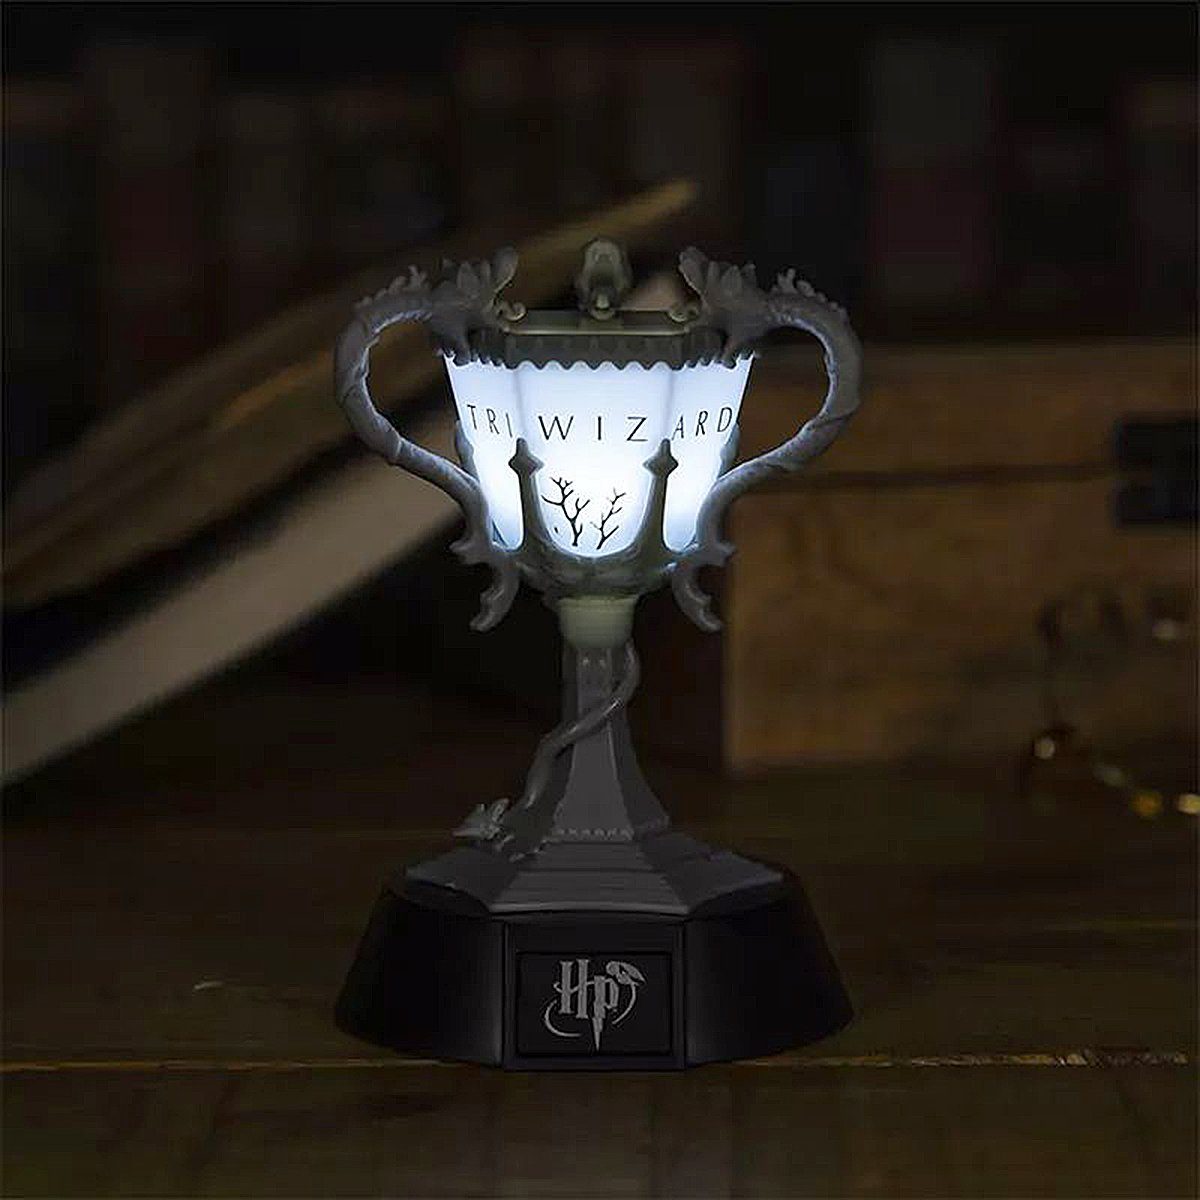 Paladone Stehlampe Harry Potter Leuchte 3D Icon Triwizard Light Pokal